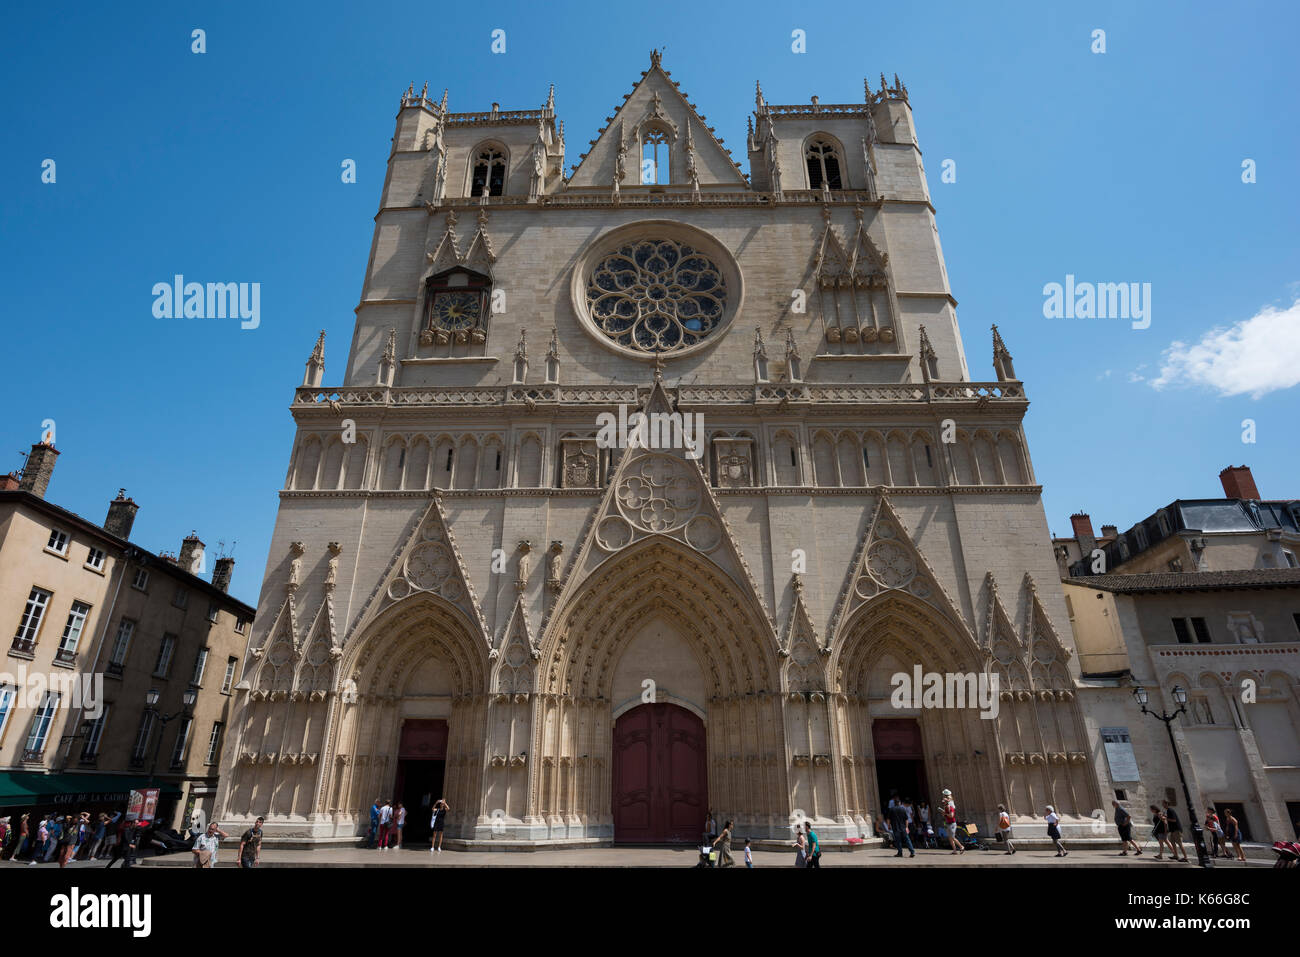 Cathedral Saint-Jean-Baptiste de Lyon with crowd, Roman Catholic church located on Place Saint-Jean in Lyon, France Stock Photo